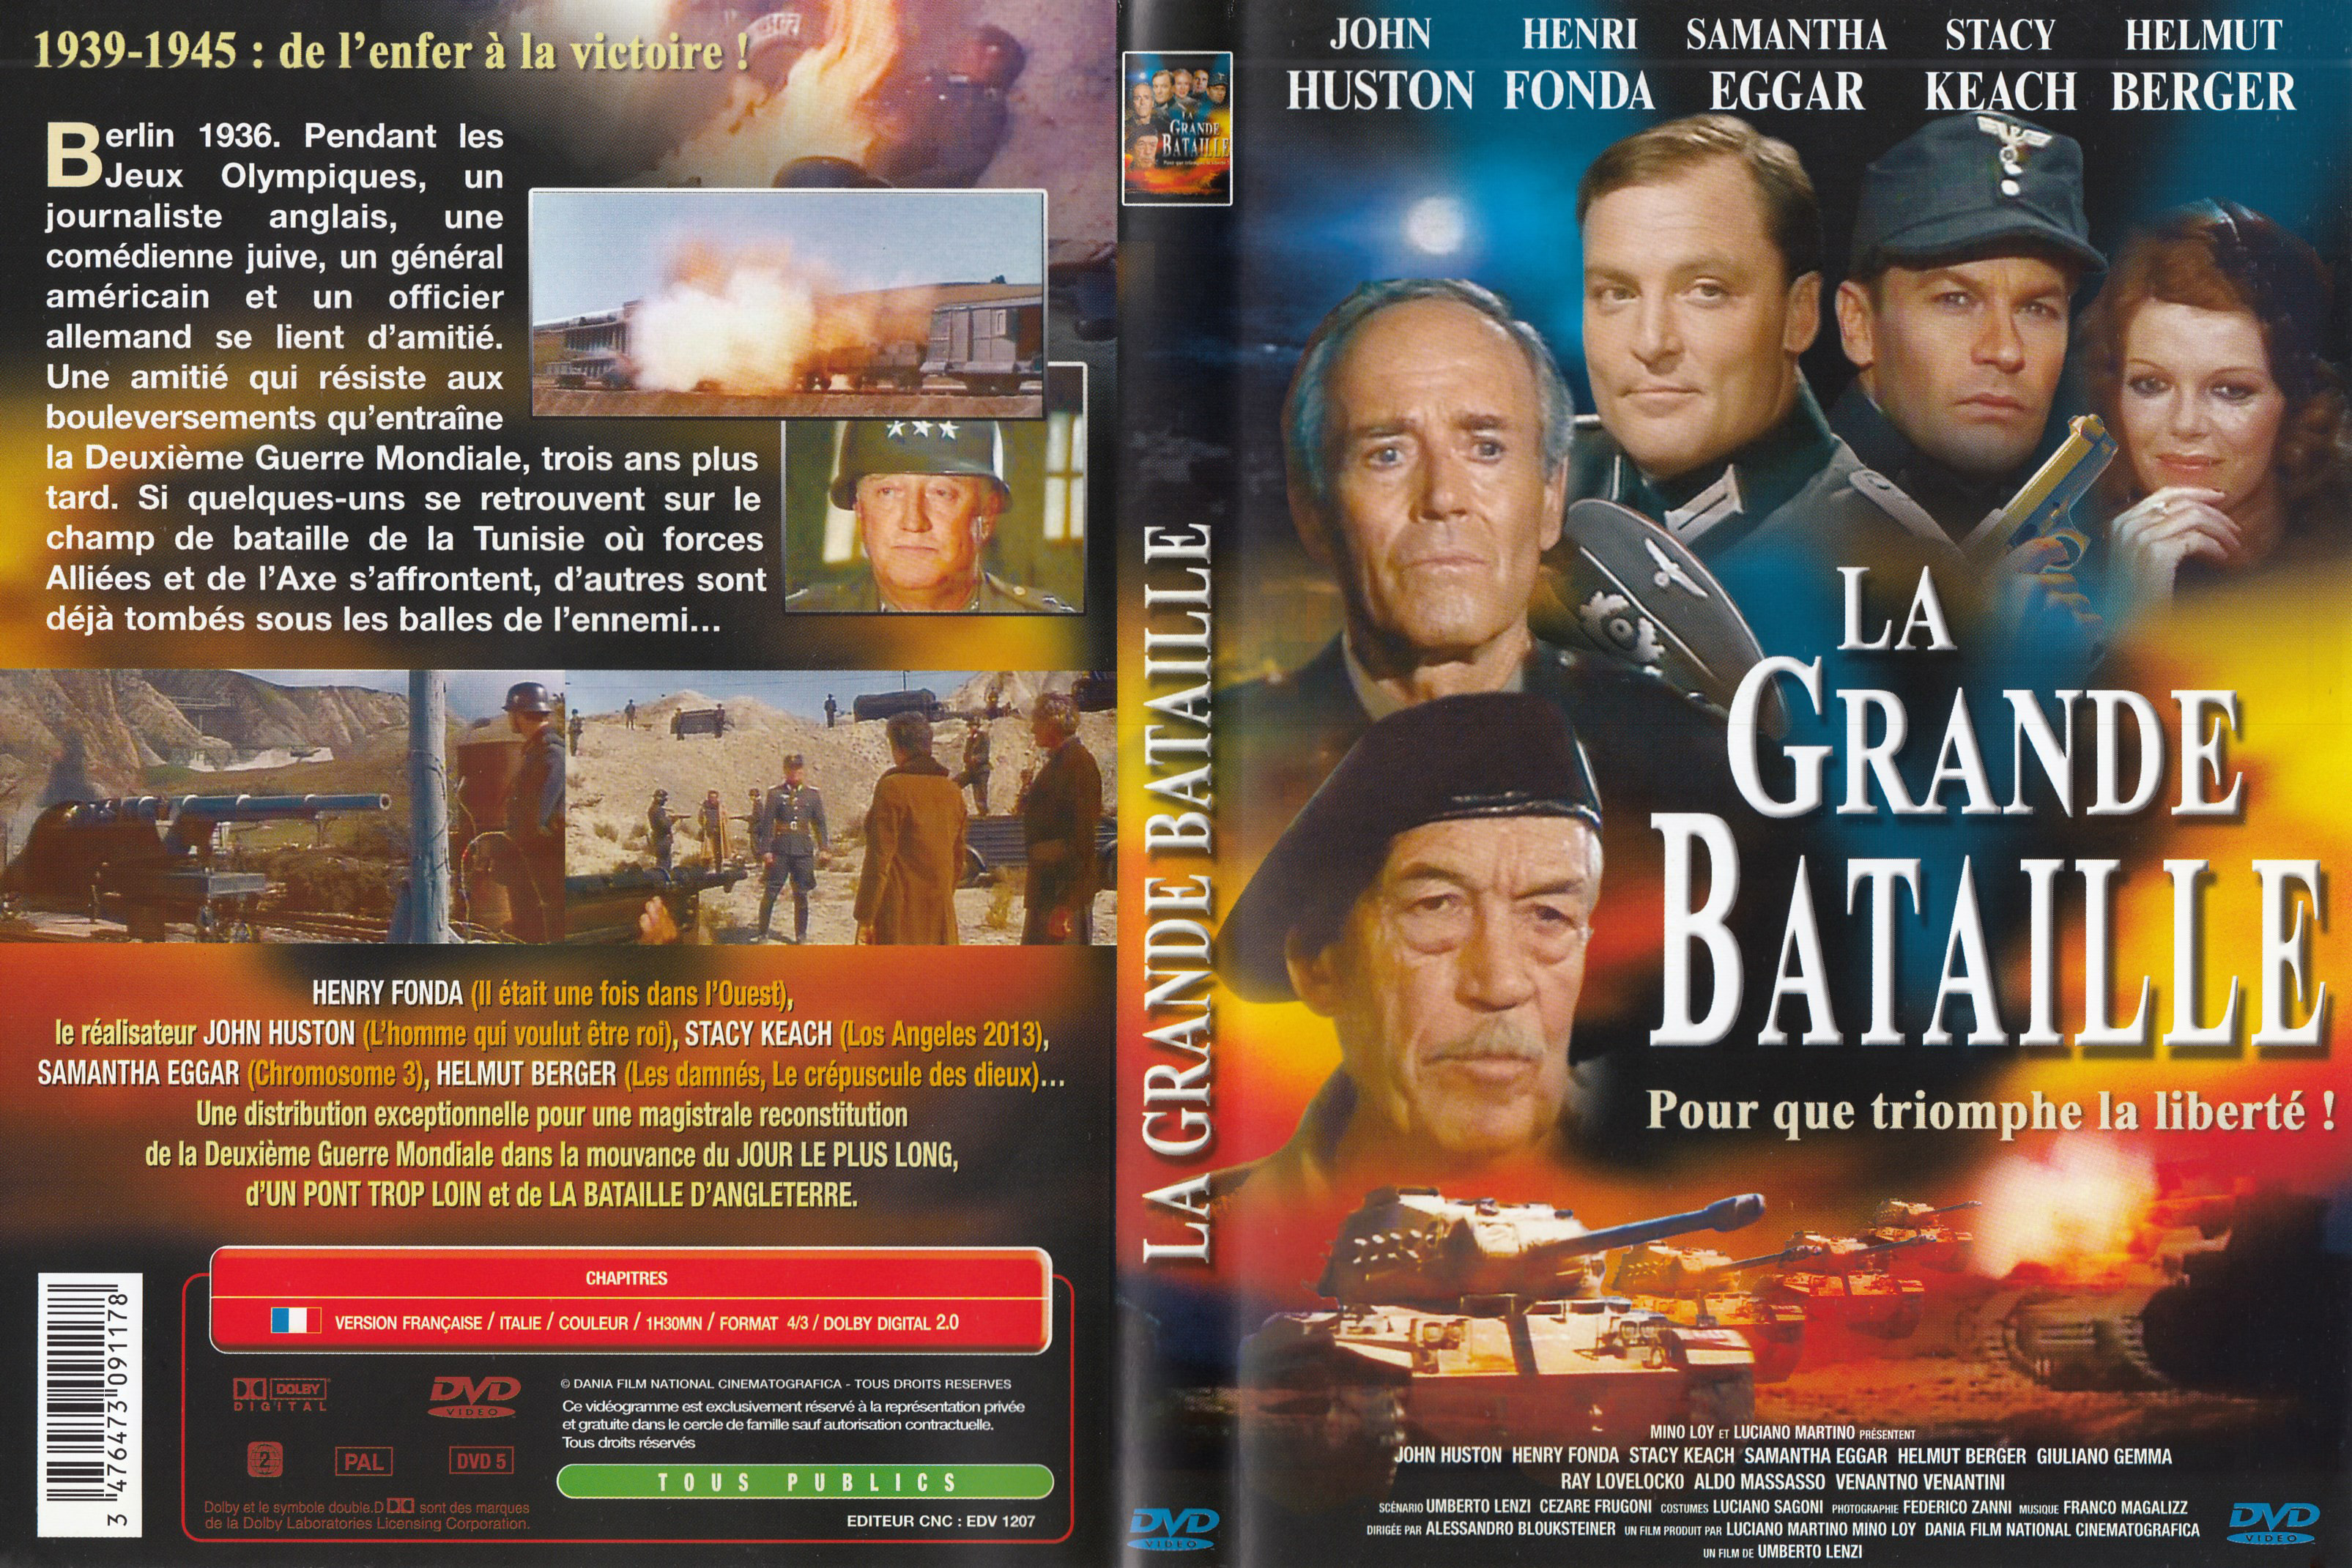 Jaquette DVD La grande bataille